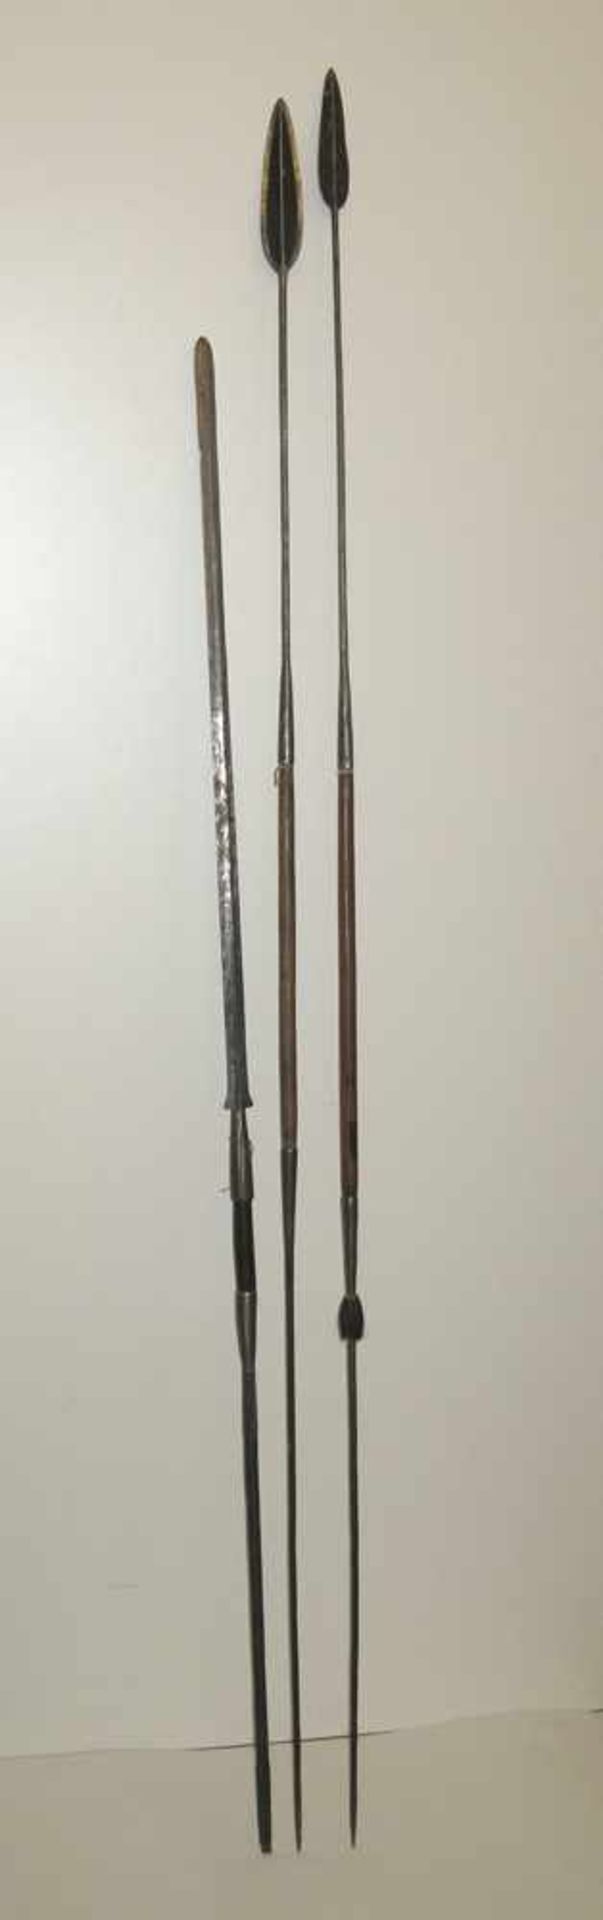 Drei Speere Afrika. Beidseitig stark gegratetes, langes Blatt bzw. blattförmige Eisenspitzen, Holz-